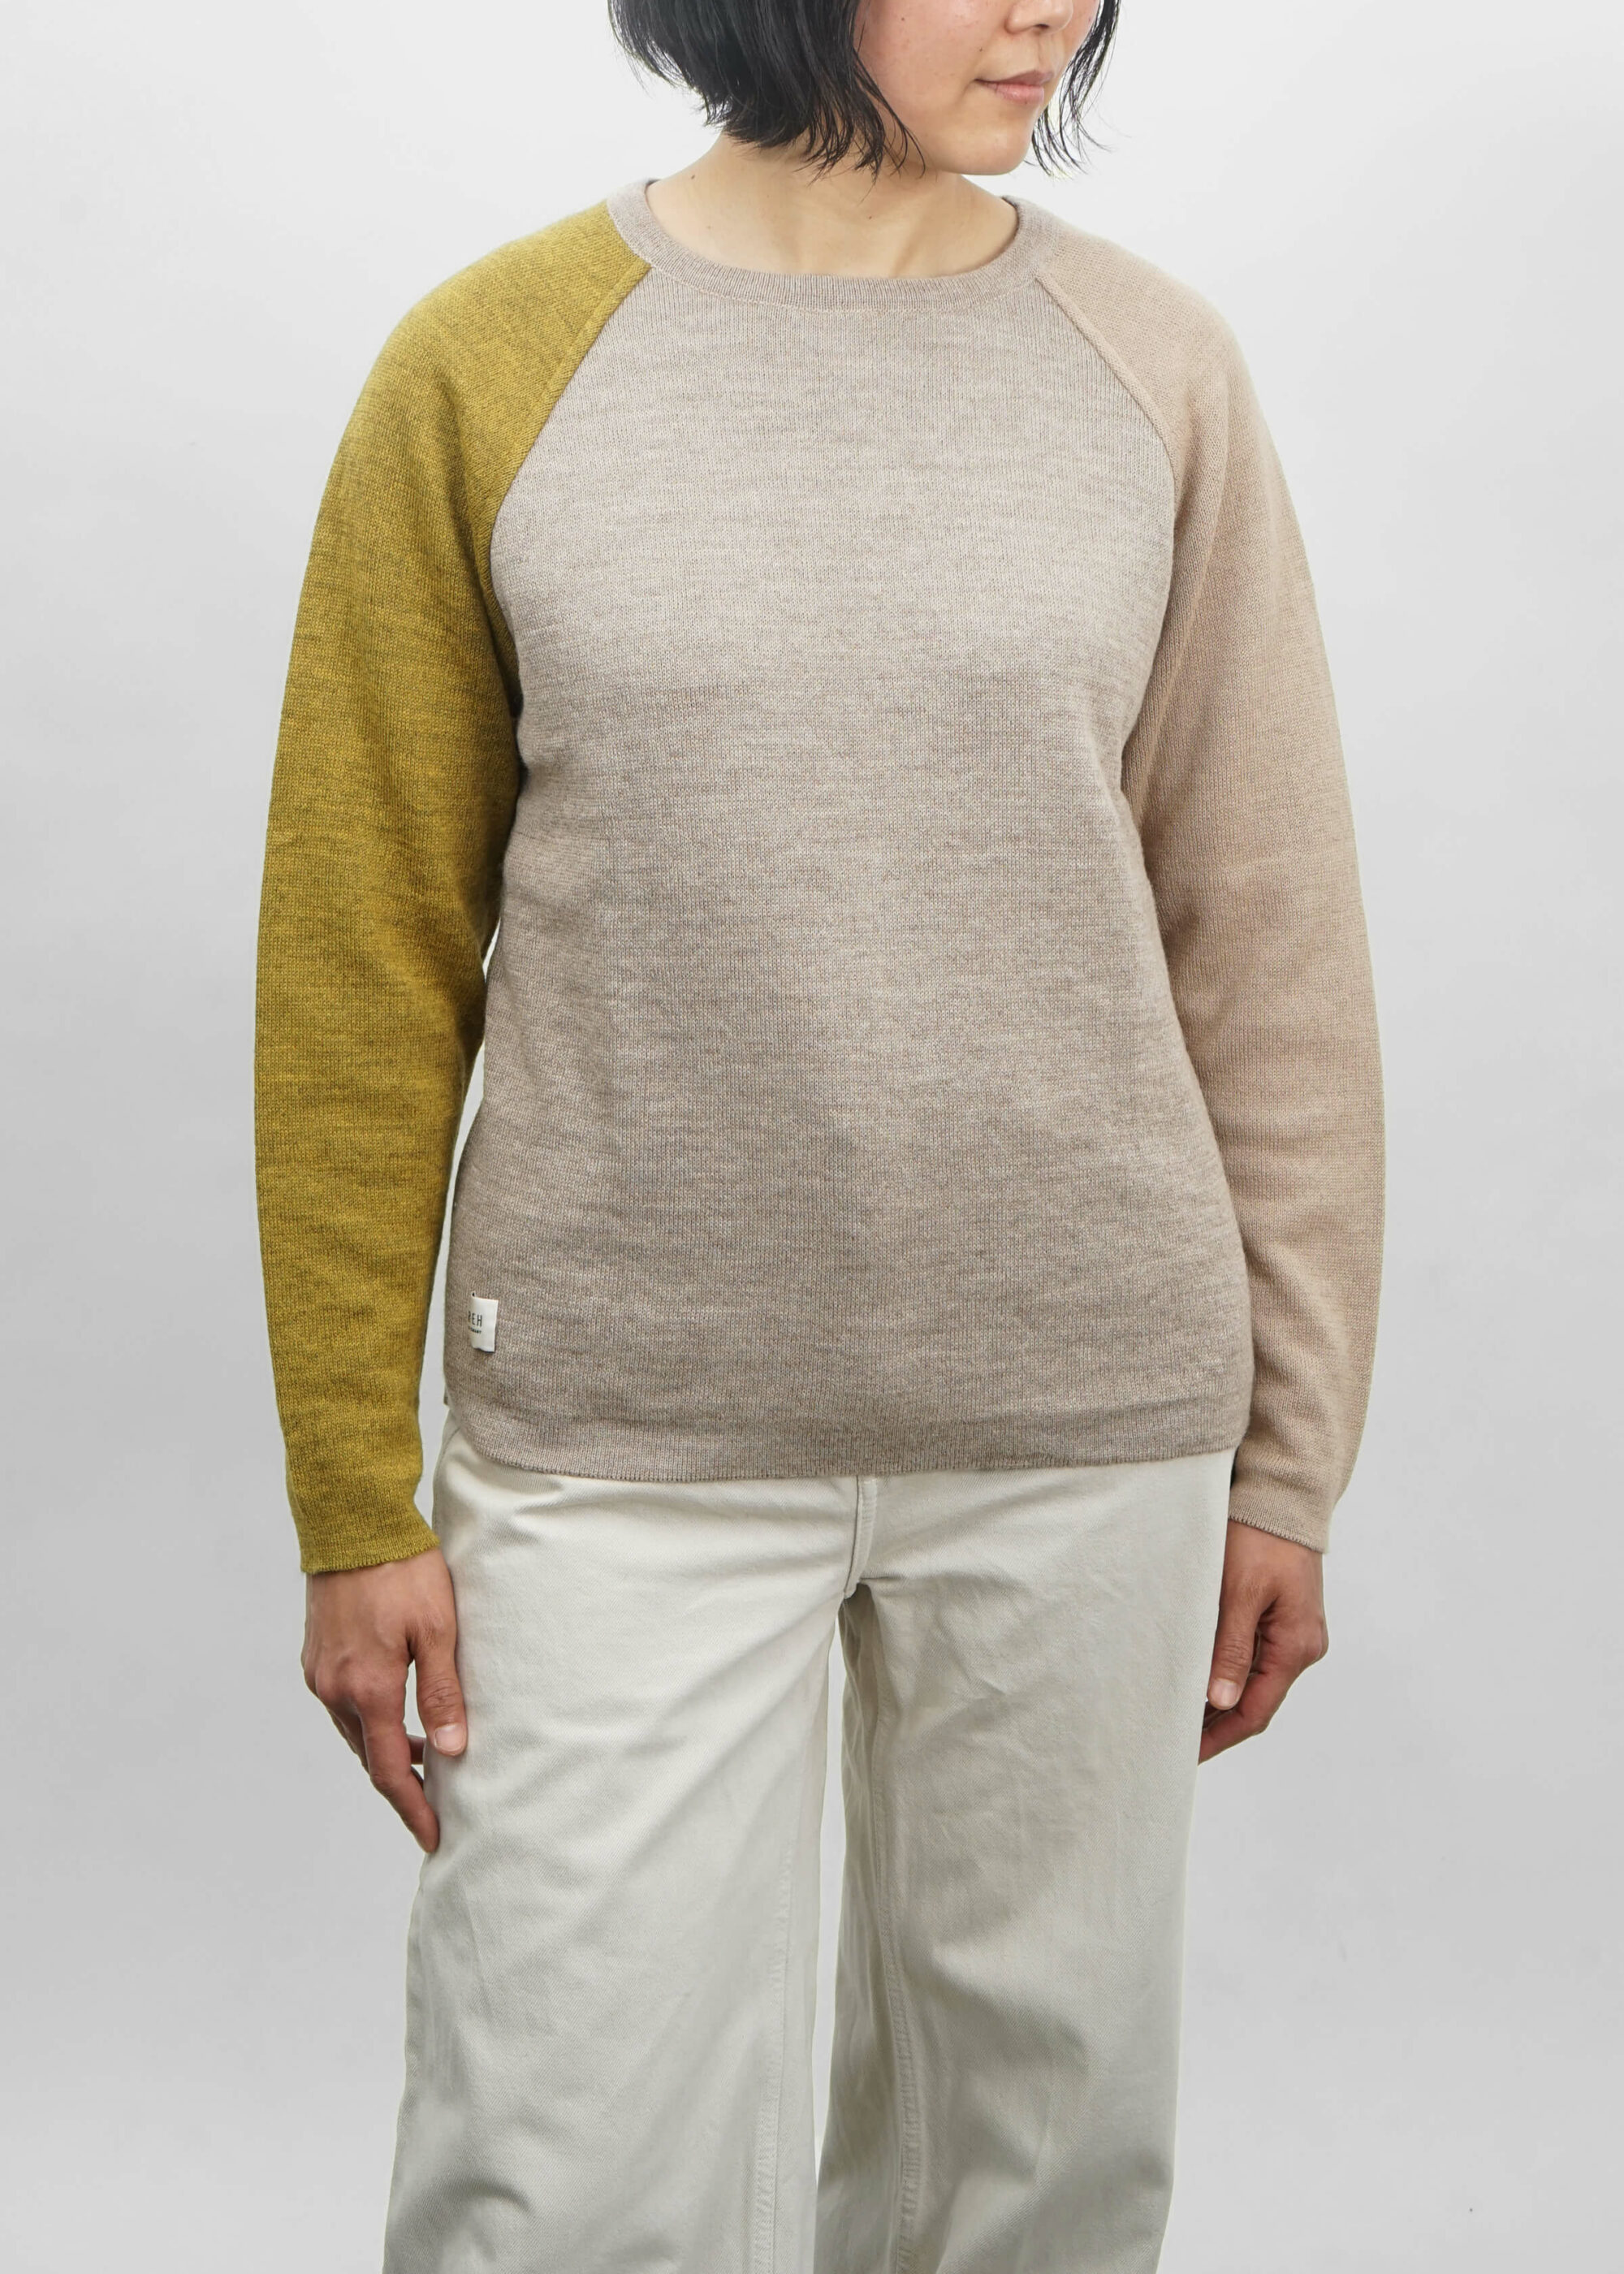 Product image for »Jhana« Reversible Sweater Baby Alpaca